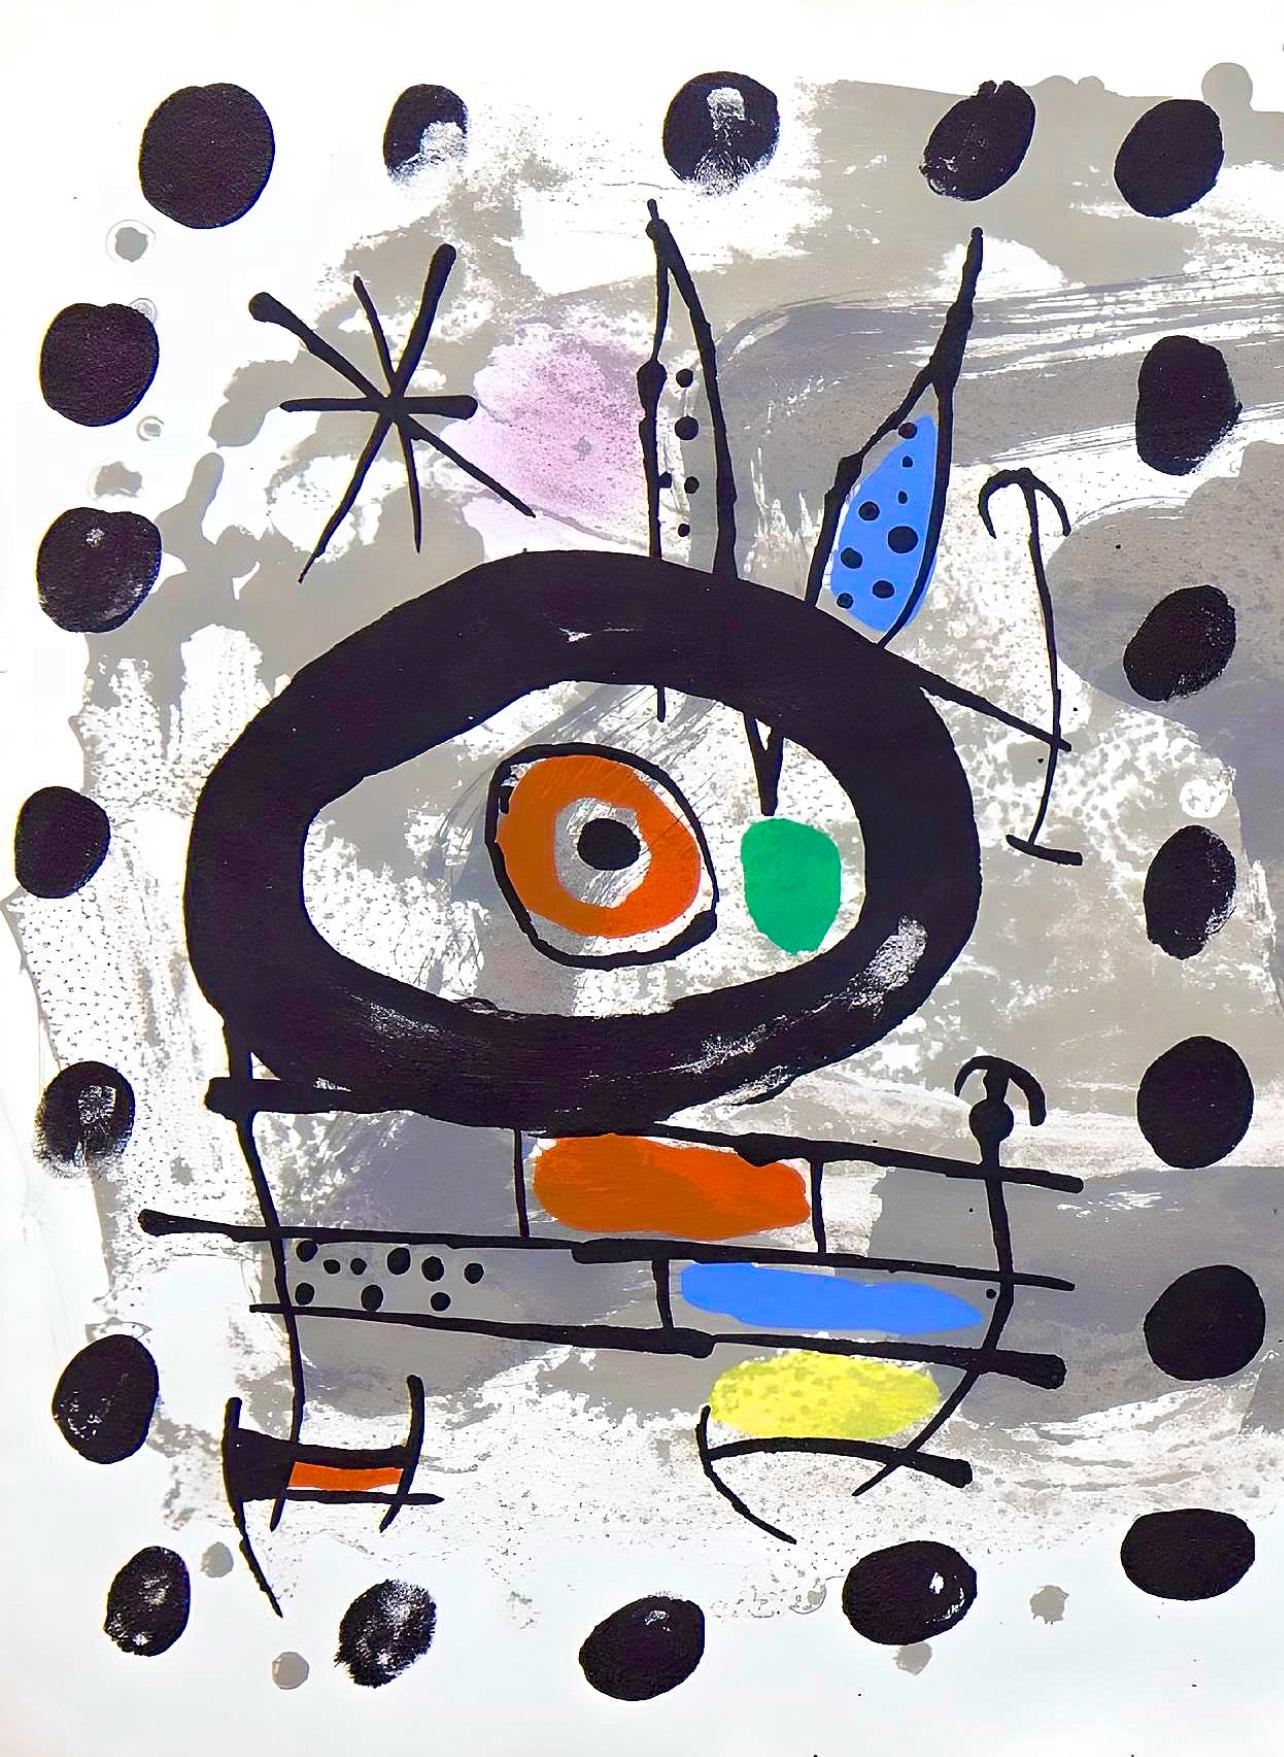 Miró, Solar Bird, Lunar Bird, Sparks (Mourlot, 567), XXe Siècle (after) - Print by Joan Miró